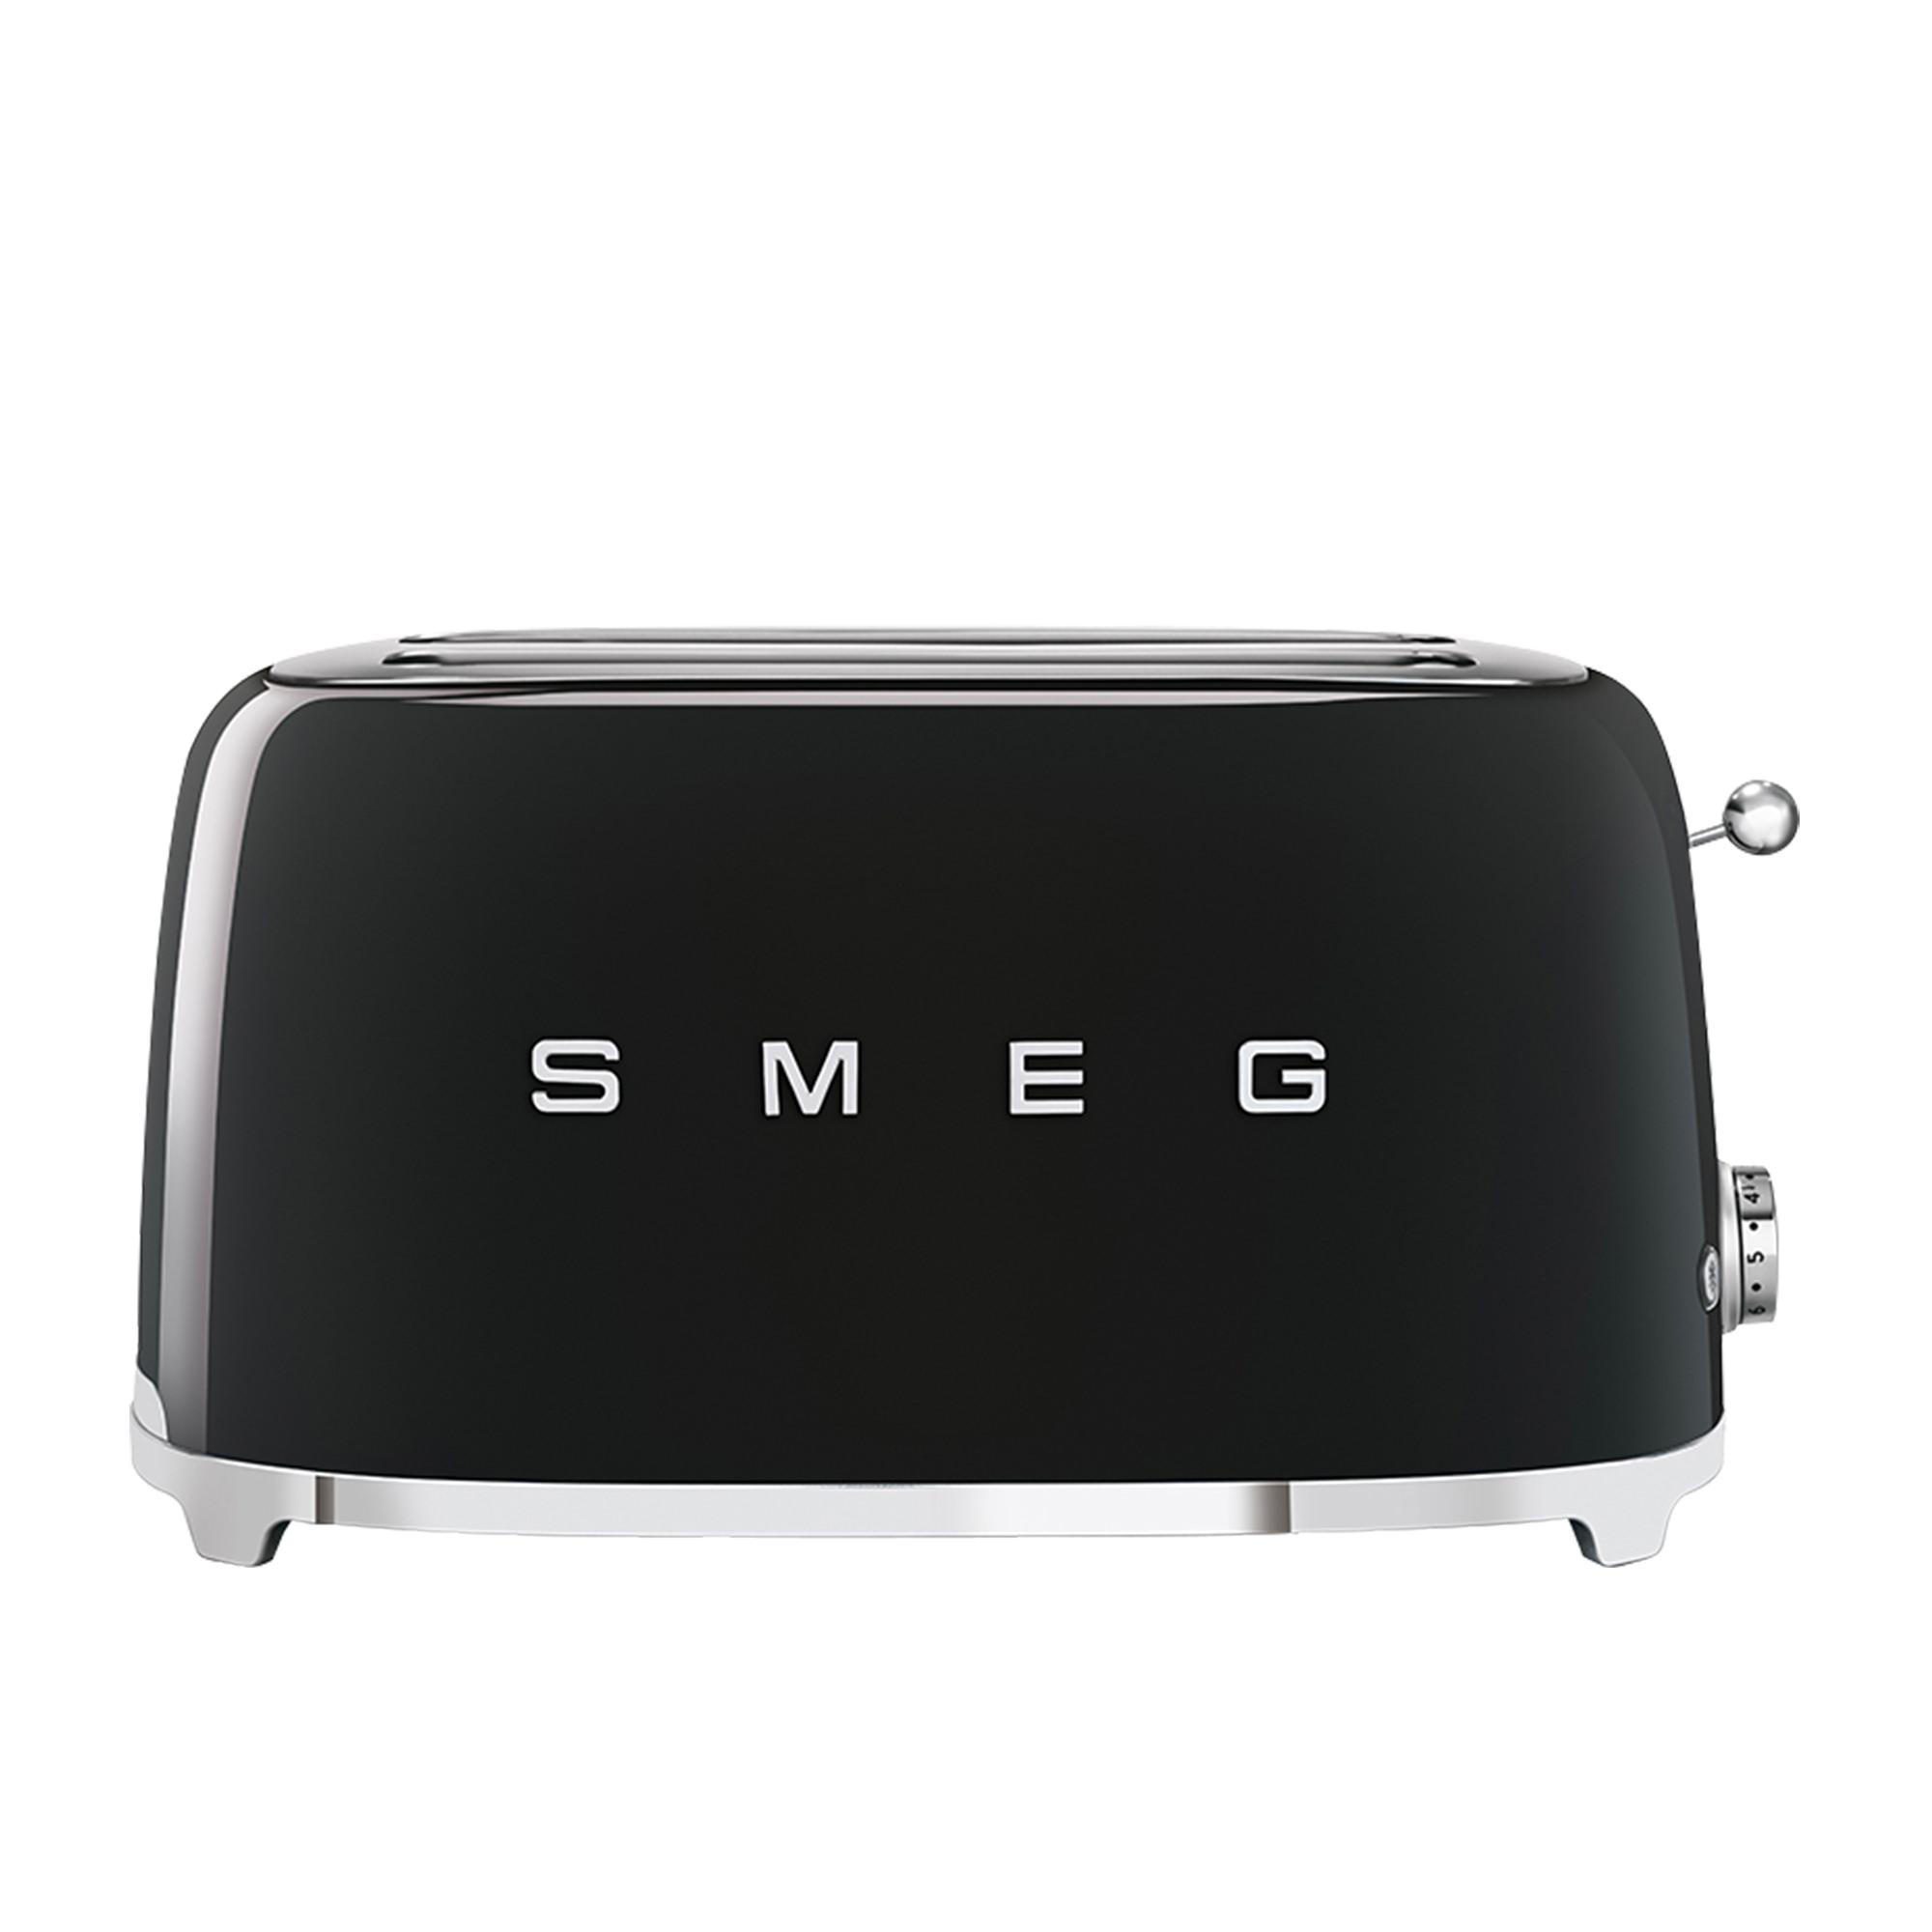 Smeg 50's Retro Style 4 Slice Toaster Black Image 4